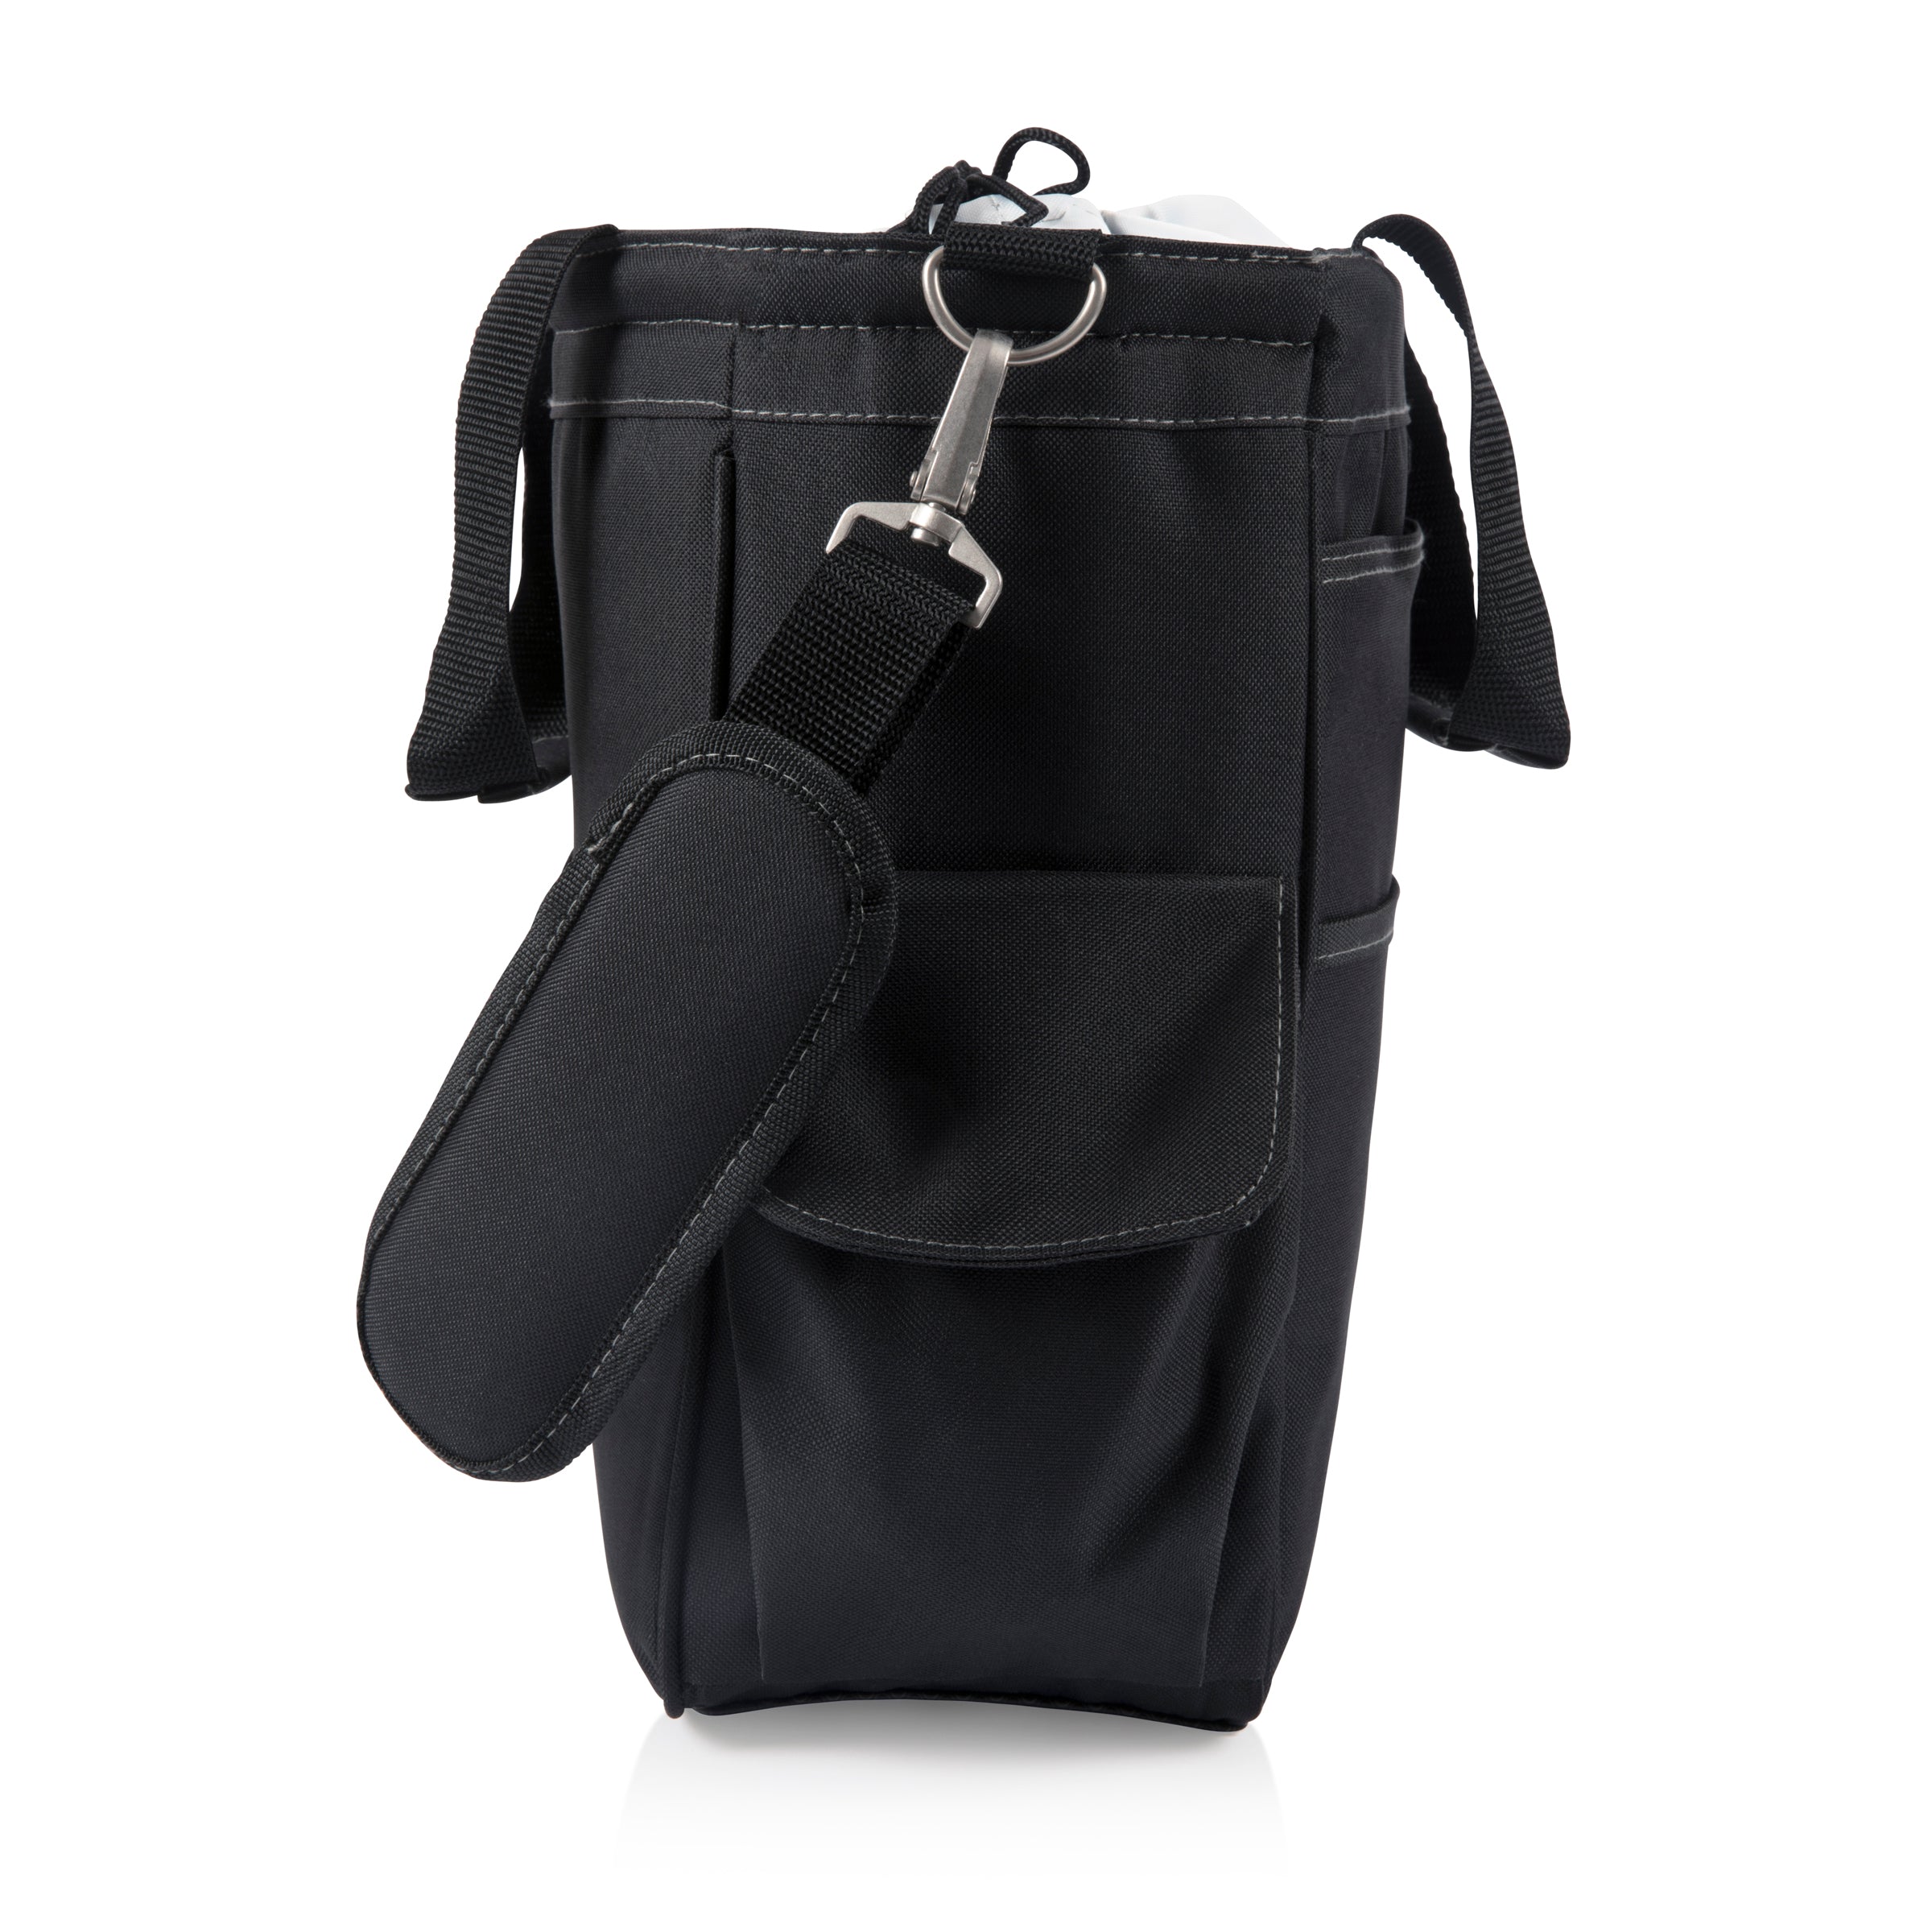 Stanford Cardinal - Activo Cooler Tote Bag